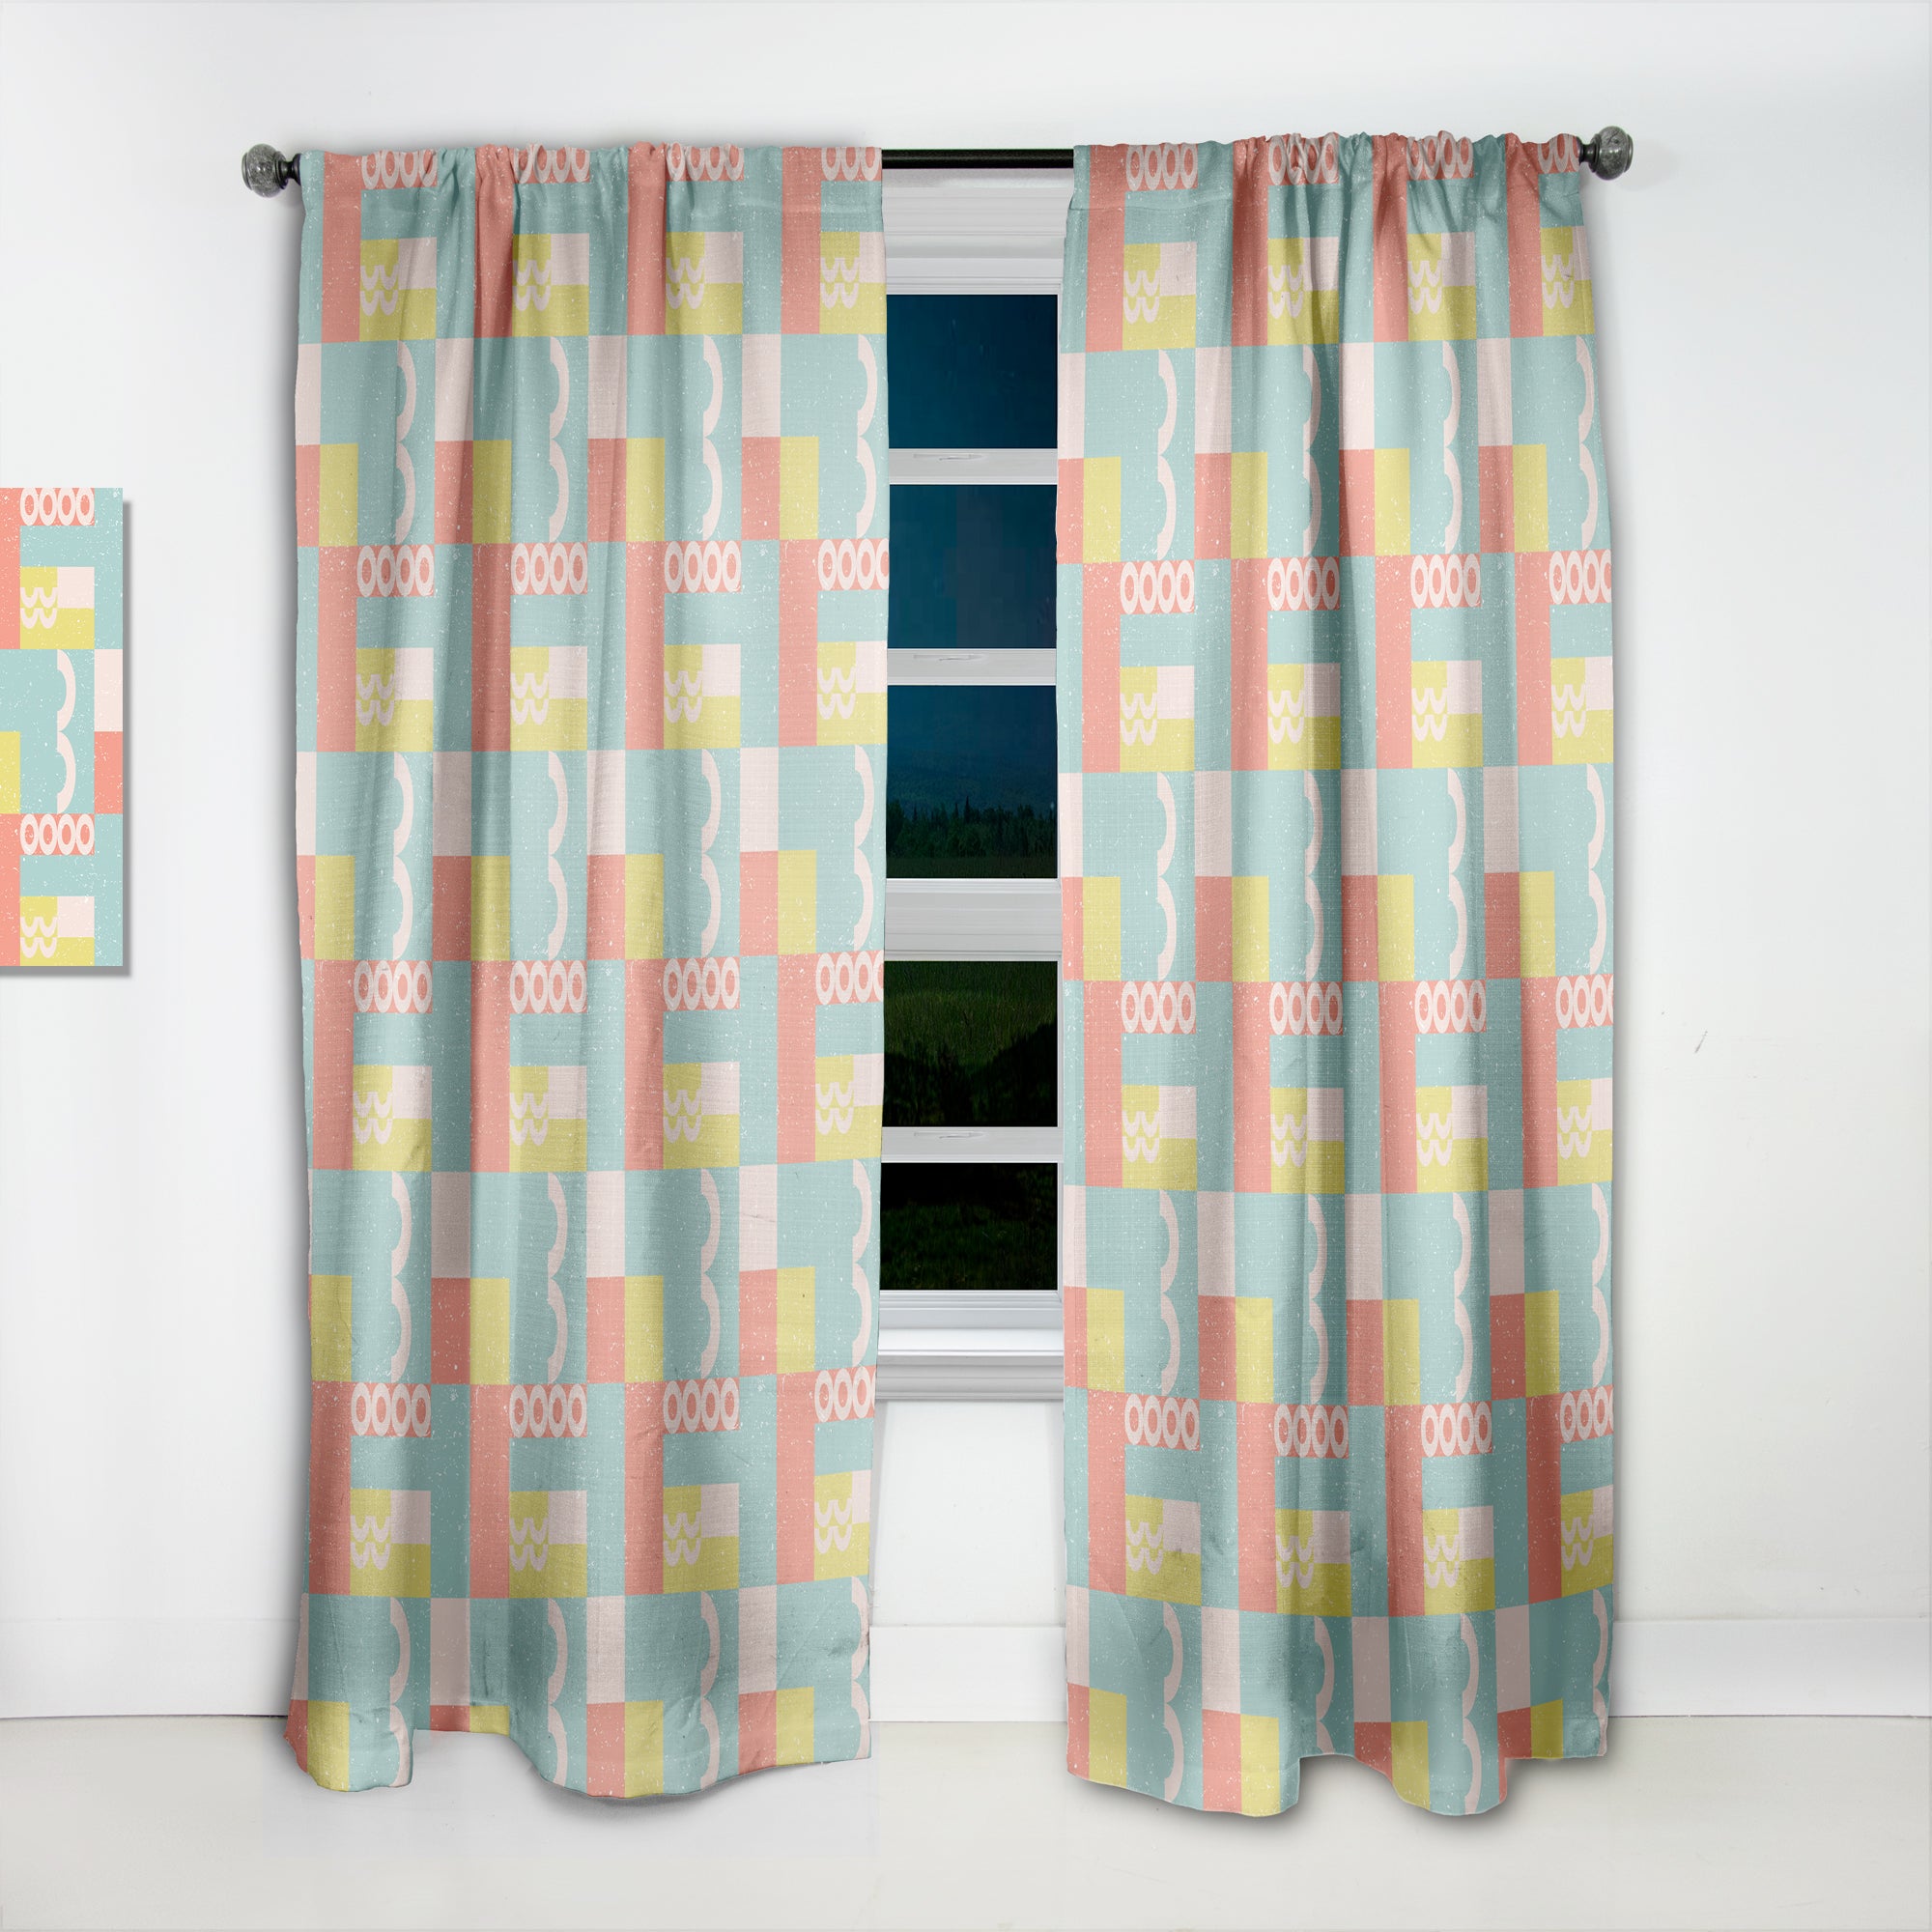 Designart 'Retro Abstract Design III' Mid-Century Modern Curtain Panel